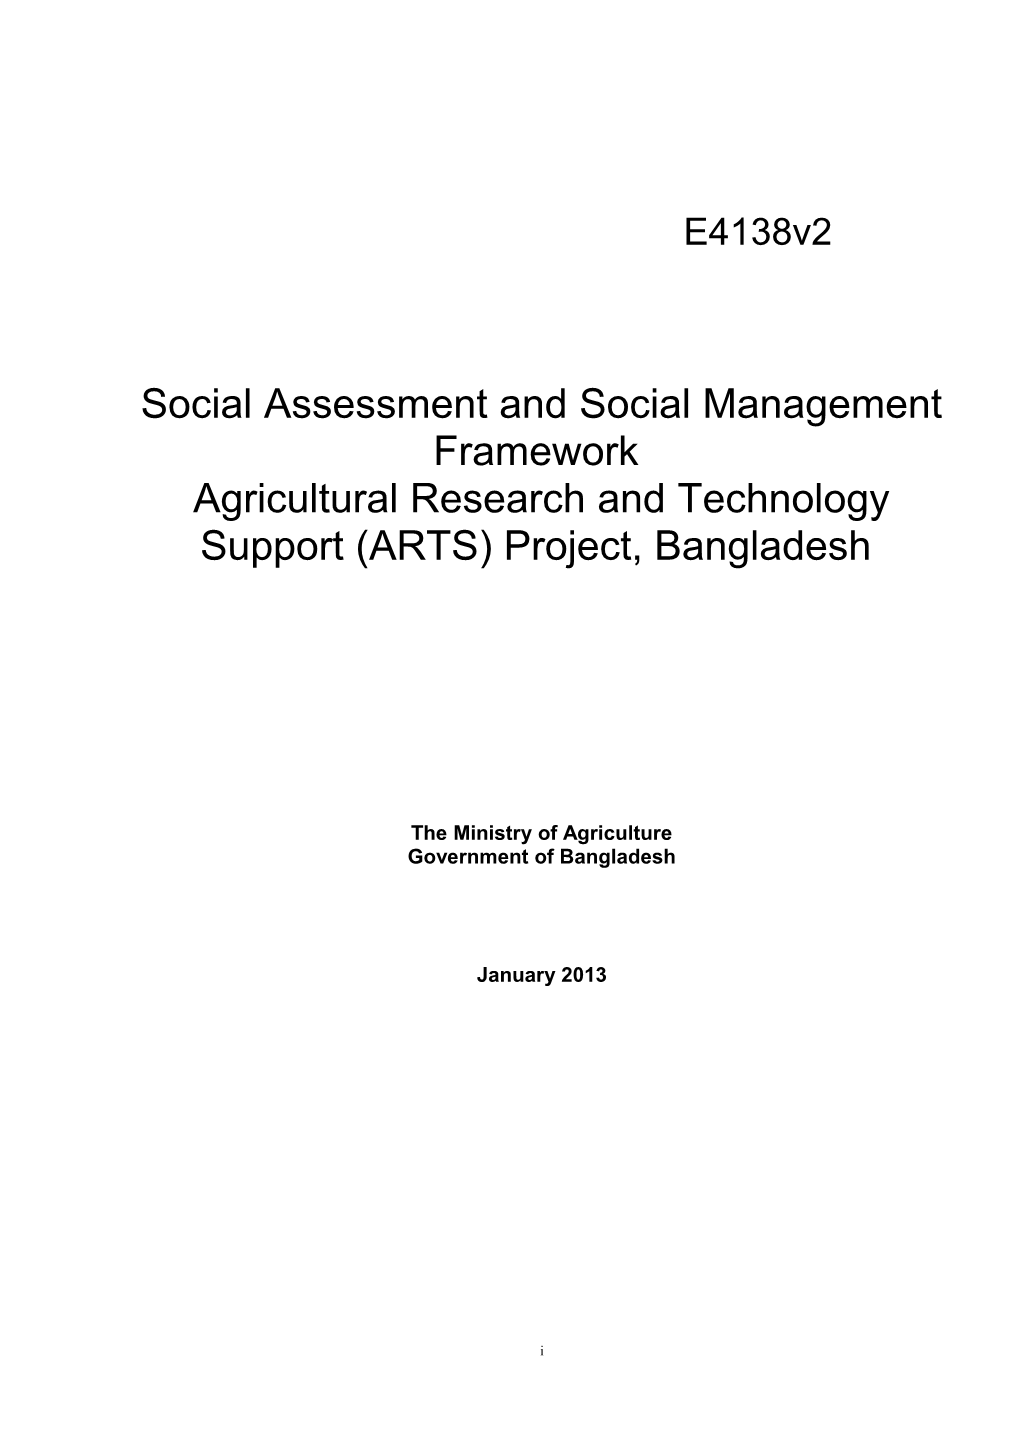 Social Assessment and Social Management Framework Report for The